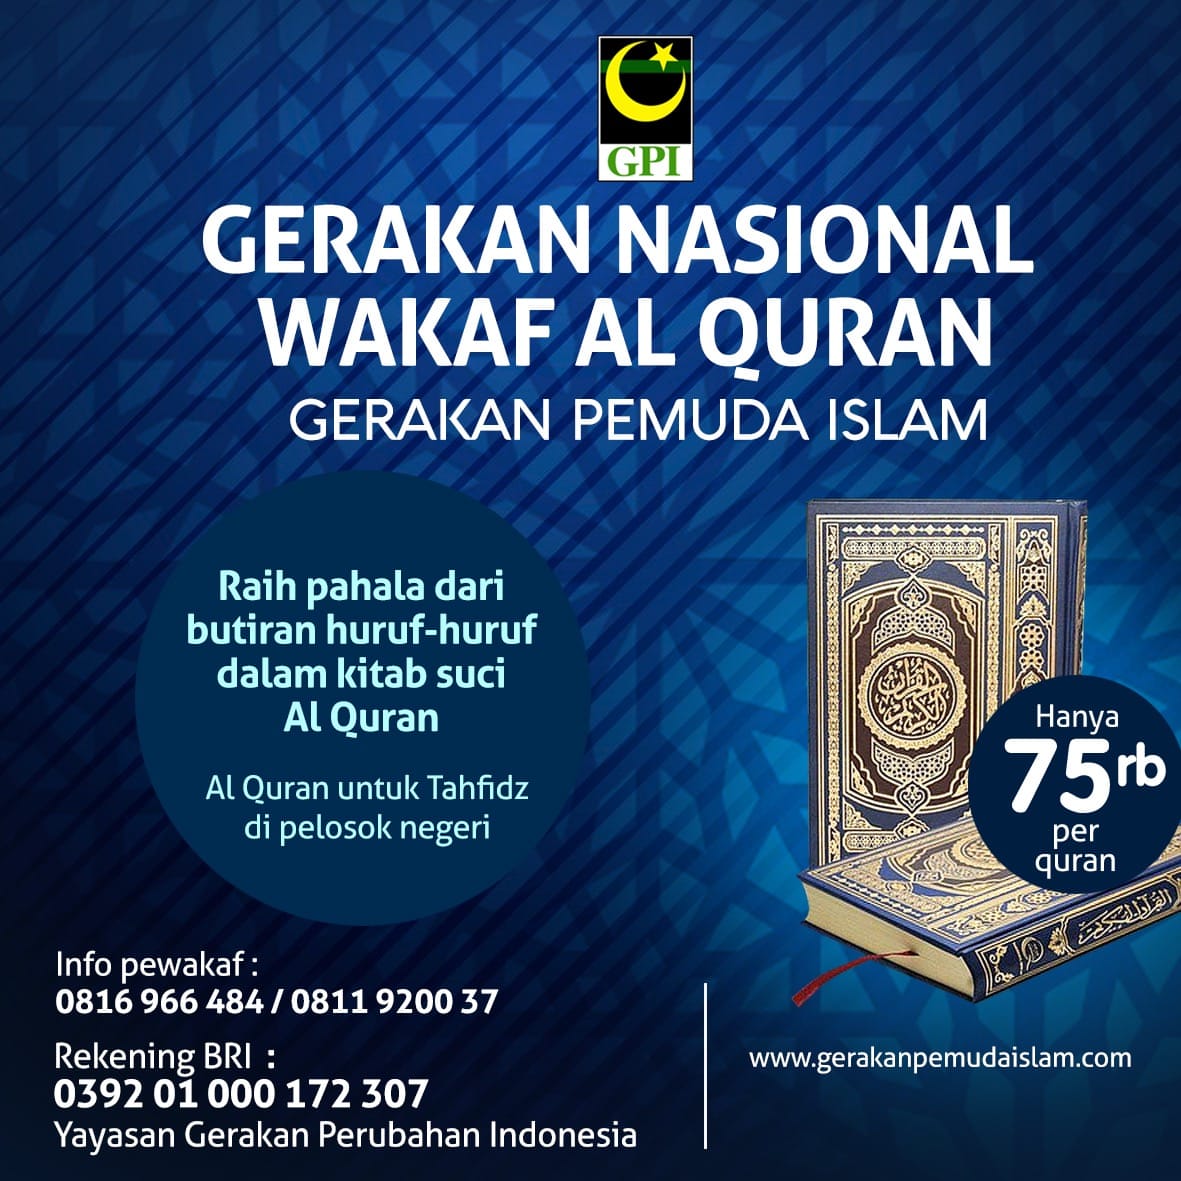 400 x 350 Program Nasional Gerakan Wakaf Al-Quran GPI